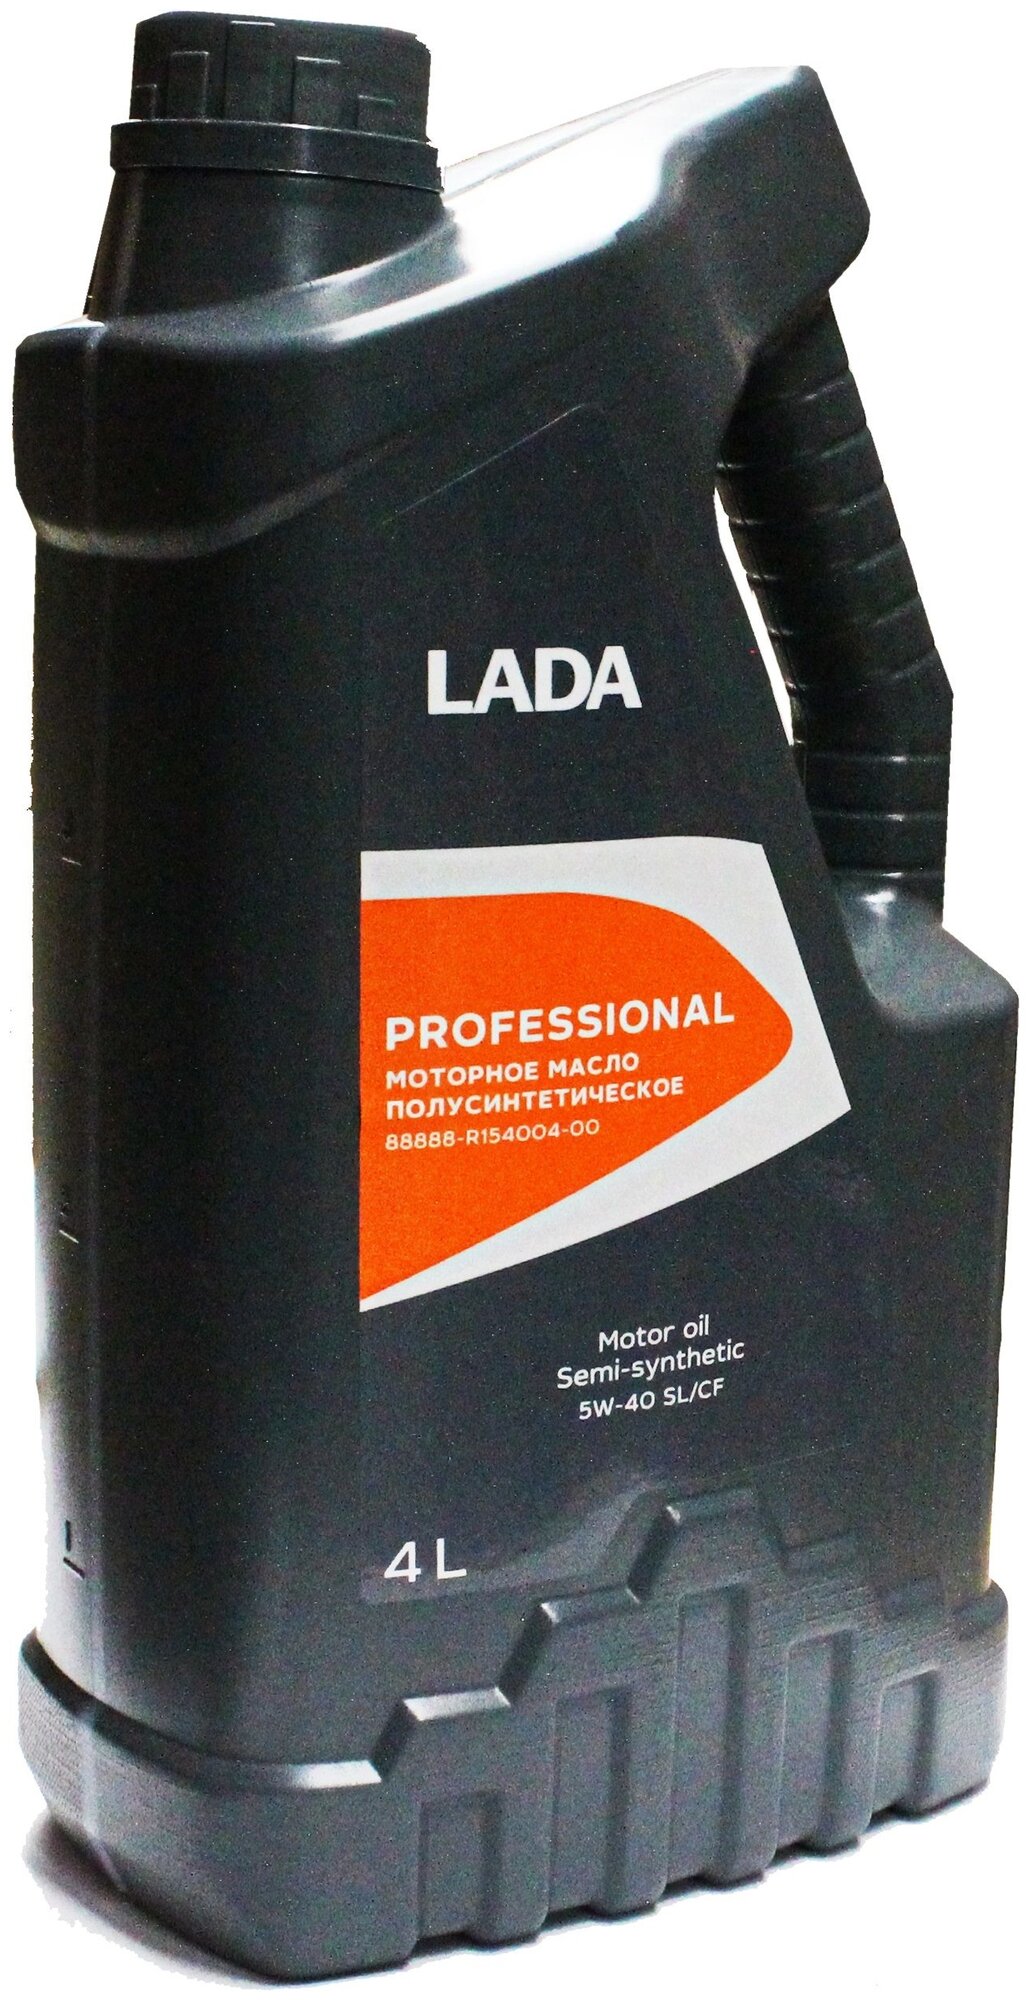 Синтетическое моторное масло LADA Professional 5W-40, 4 л, 1 шт.